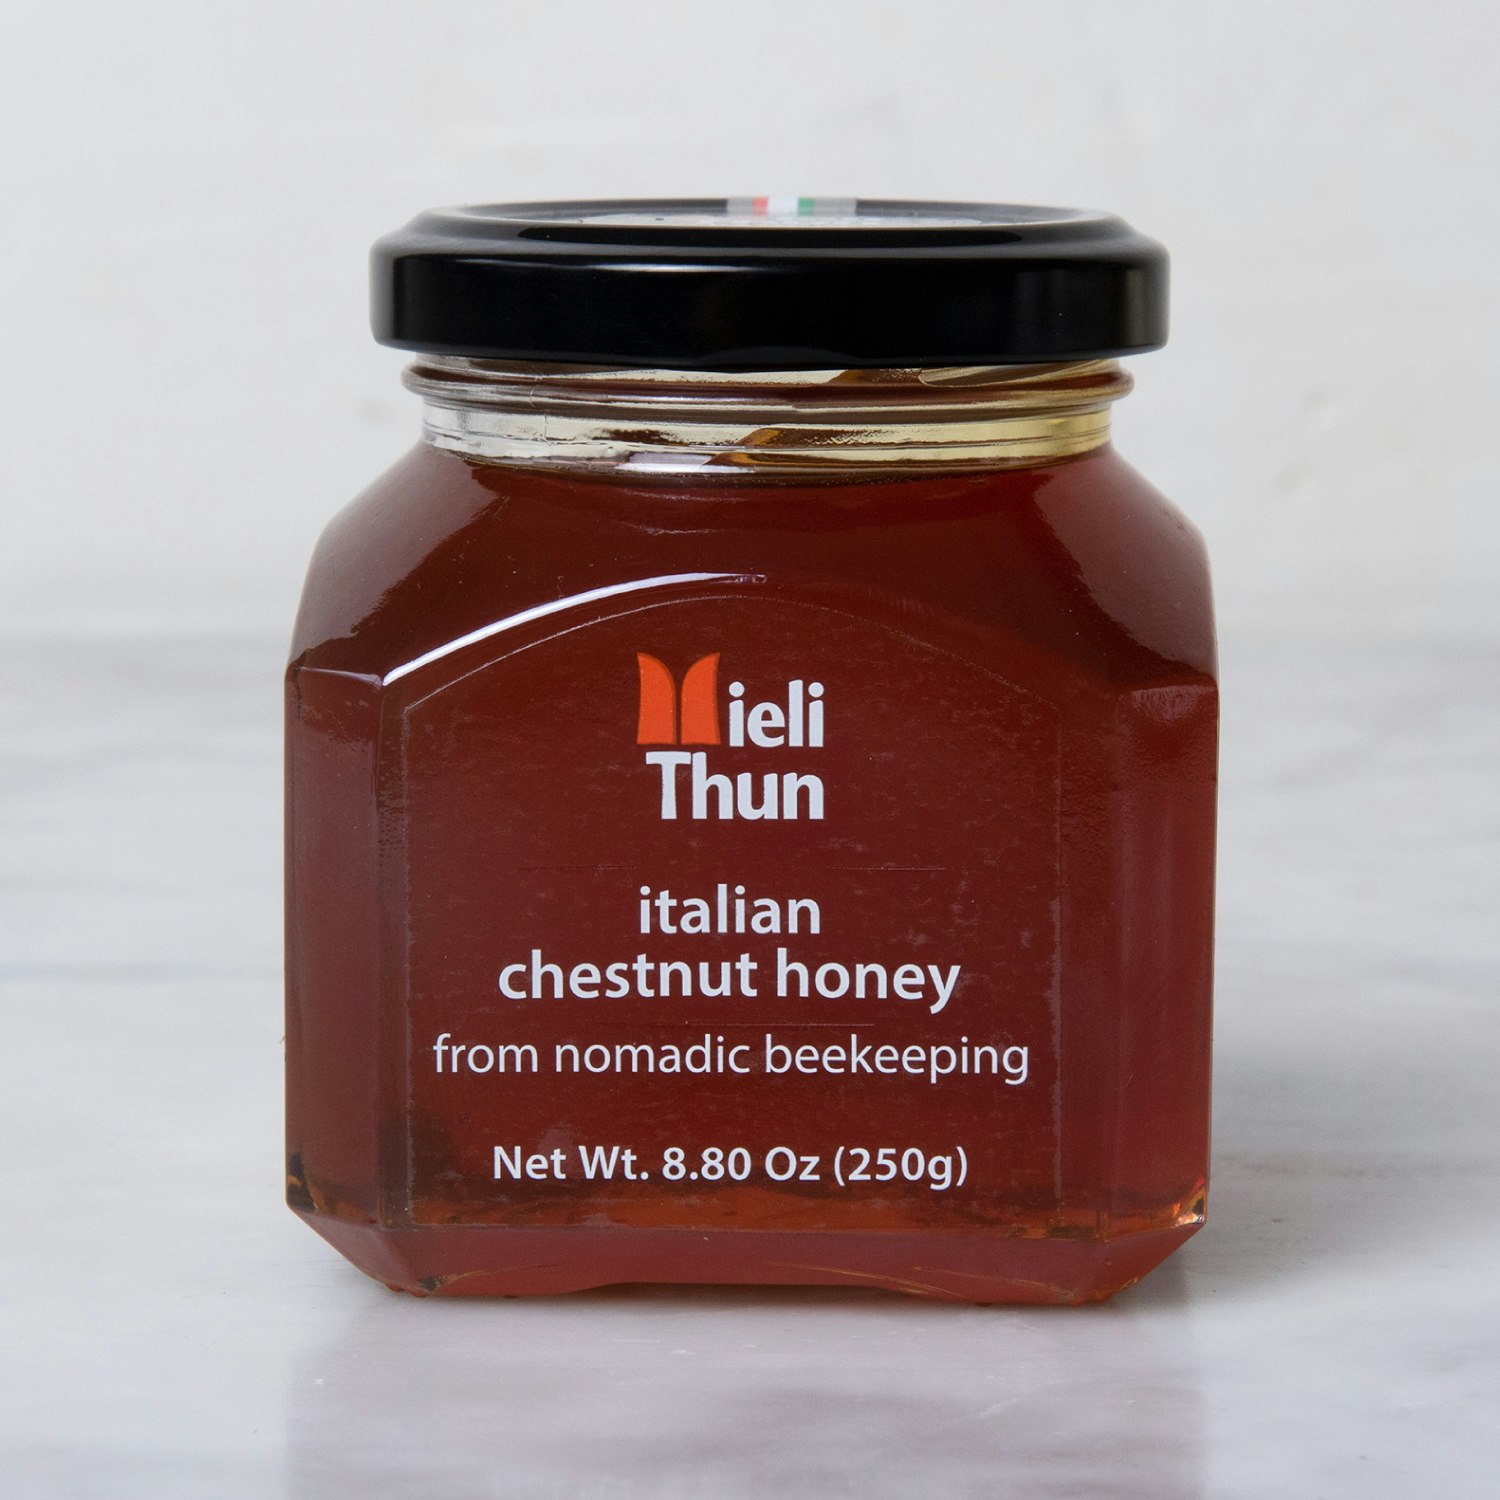 mieli thun chestnut honey specialty foods